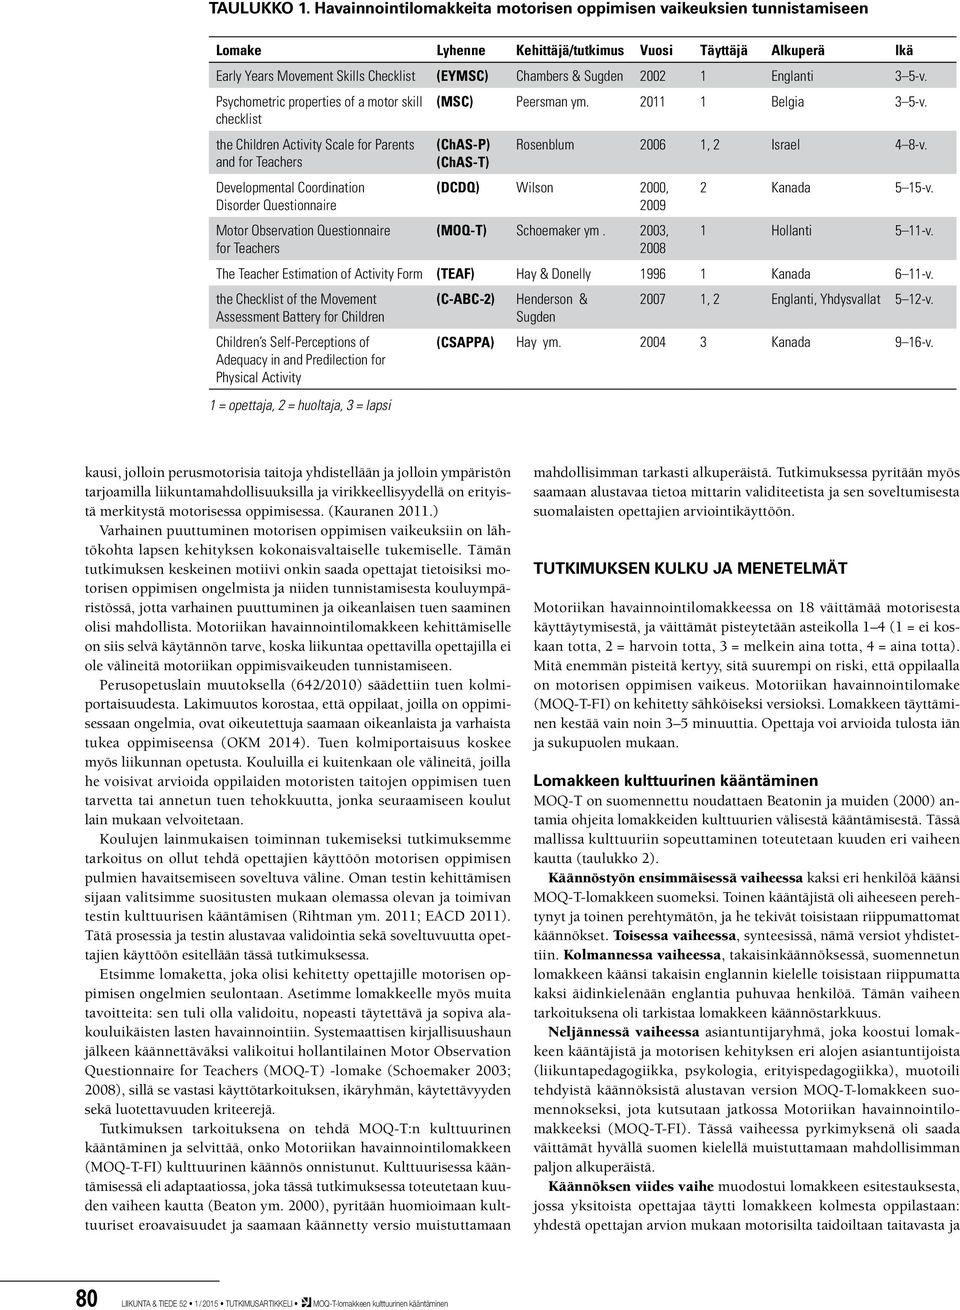 2002 1 Englanti 3 5-v. Psychometric properties of a motor skill checklist (MSC) Peersman ym. 2011 1 Belgia 3 5-v.